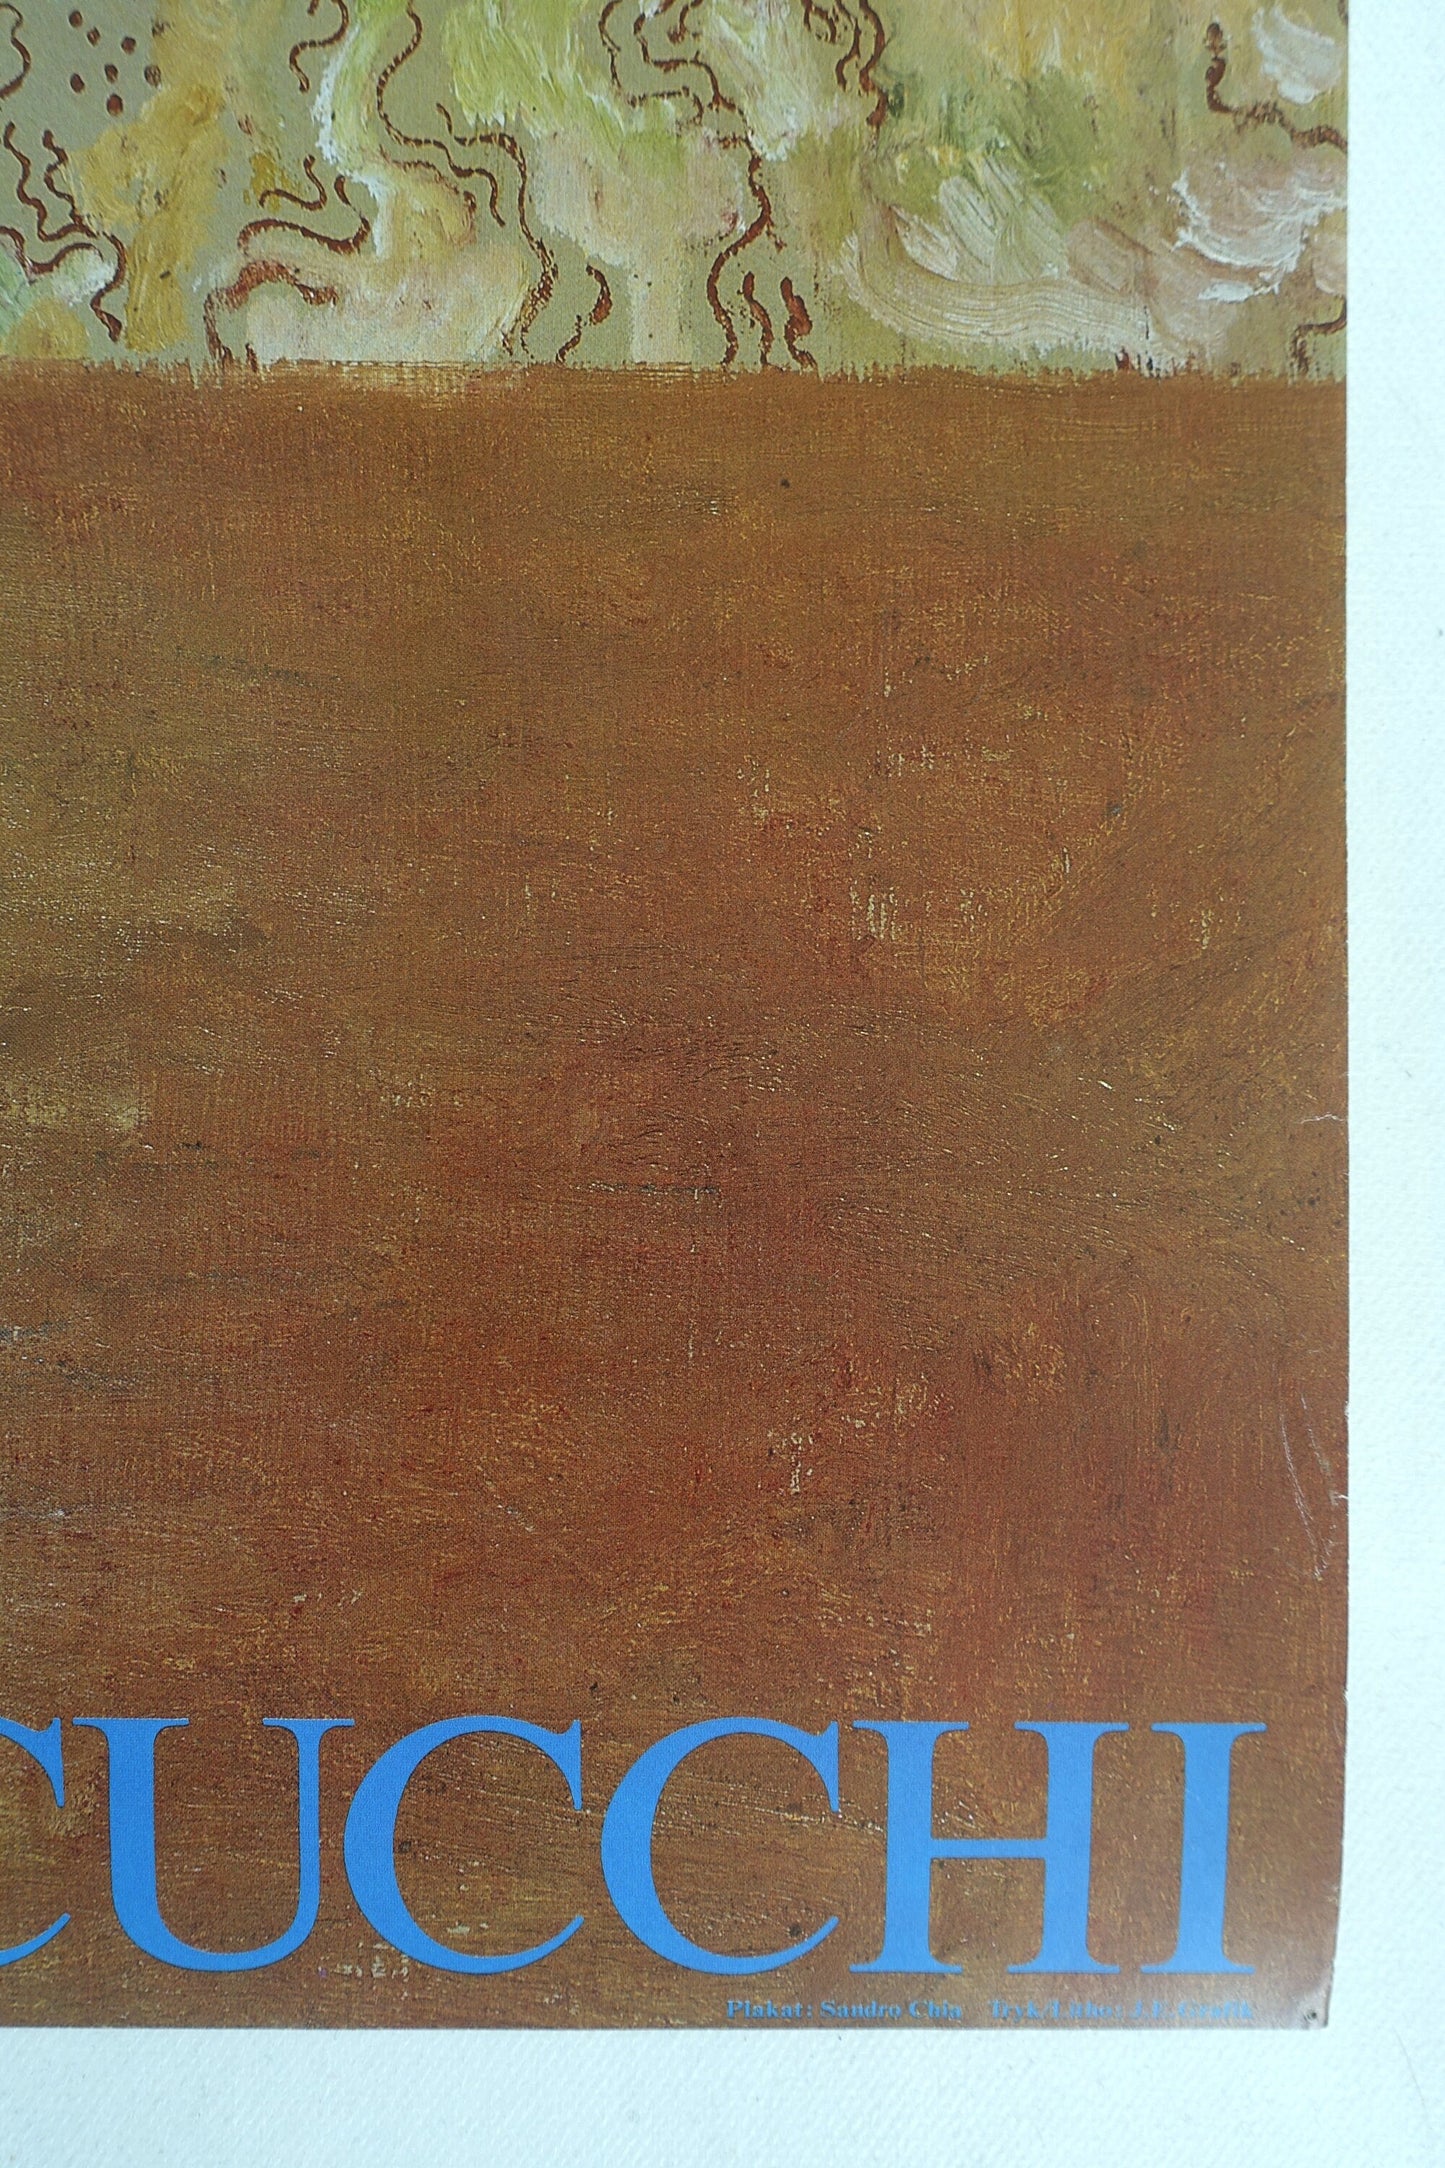 1983 Chia – Clemente – Cucchi on Louisiana Museum of Modern Art - Original Vintage Poster